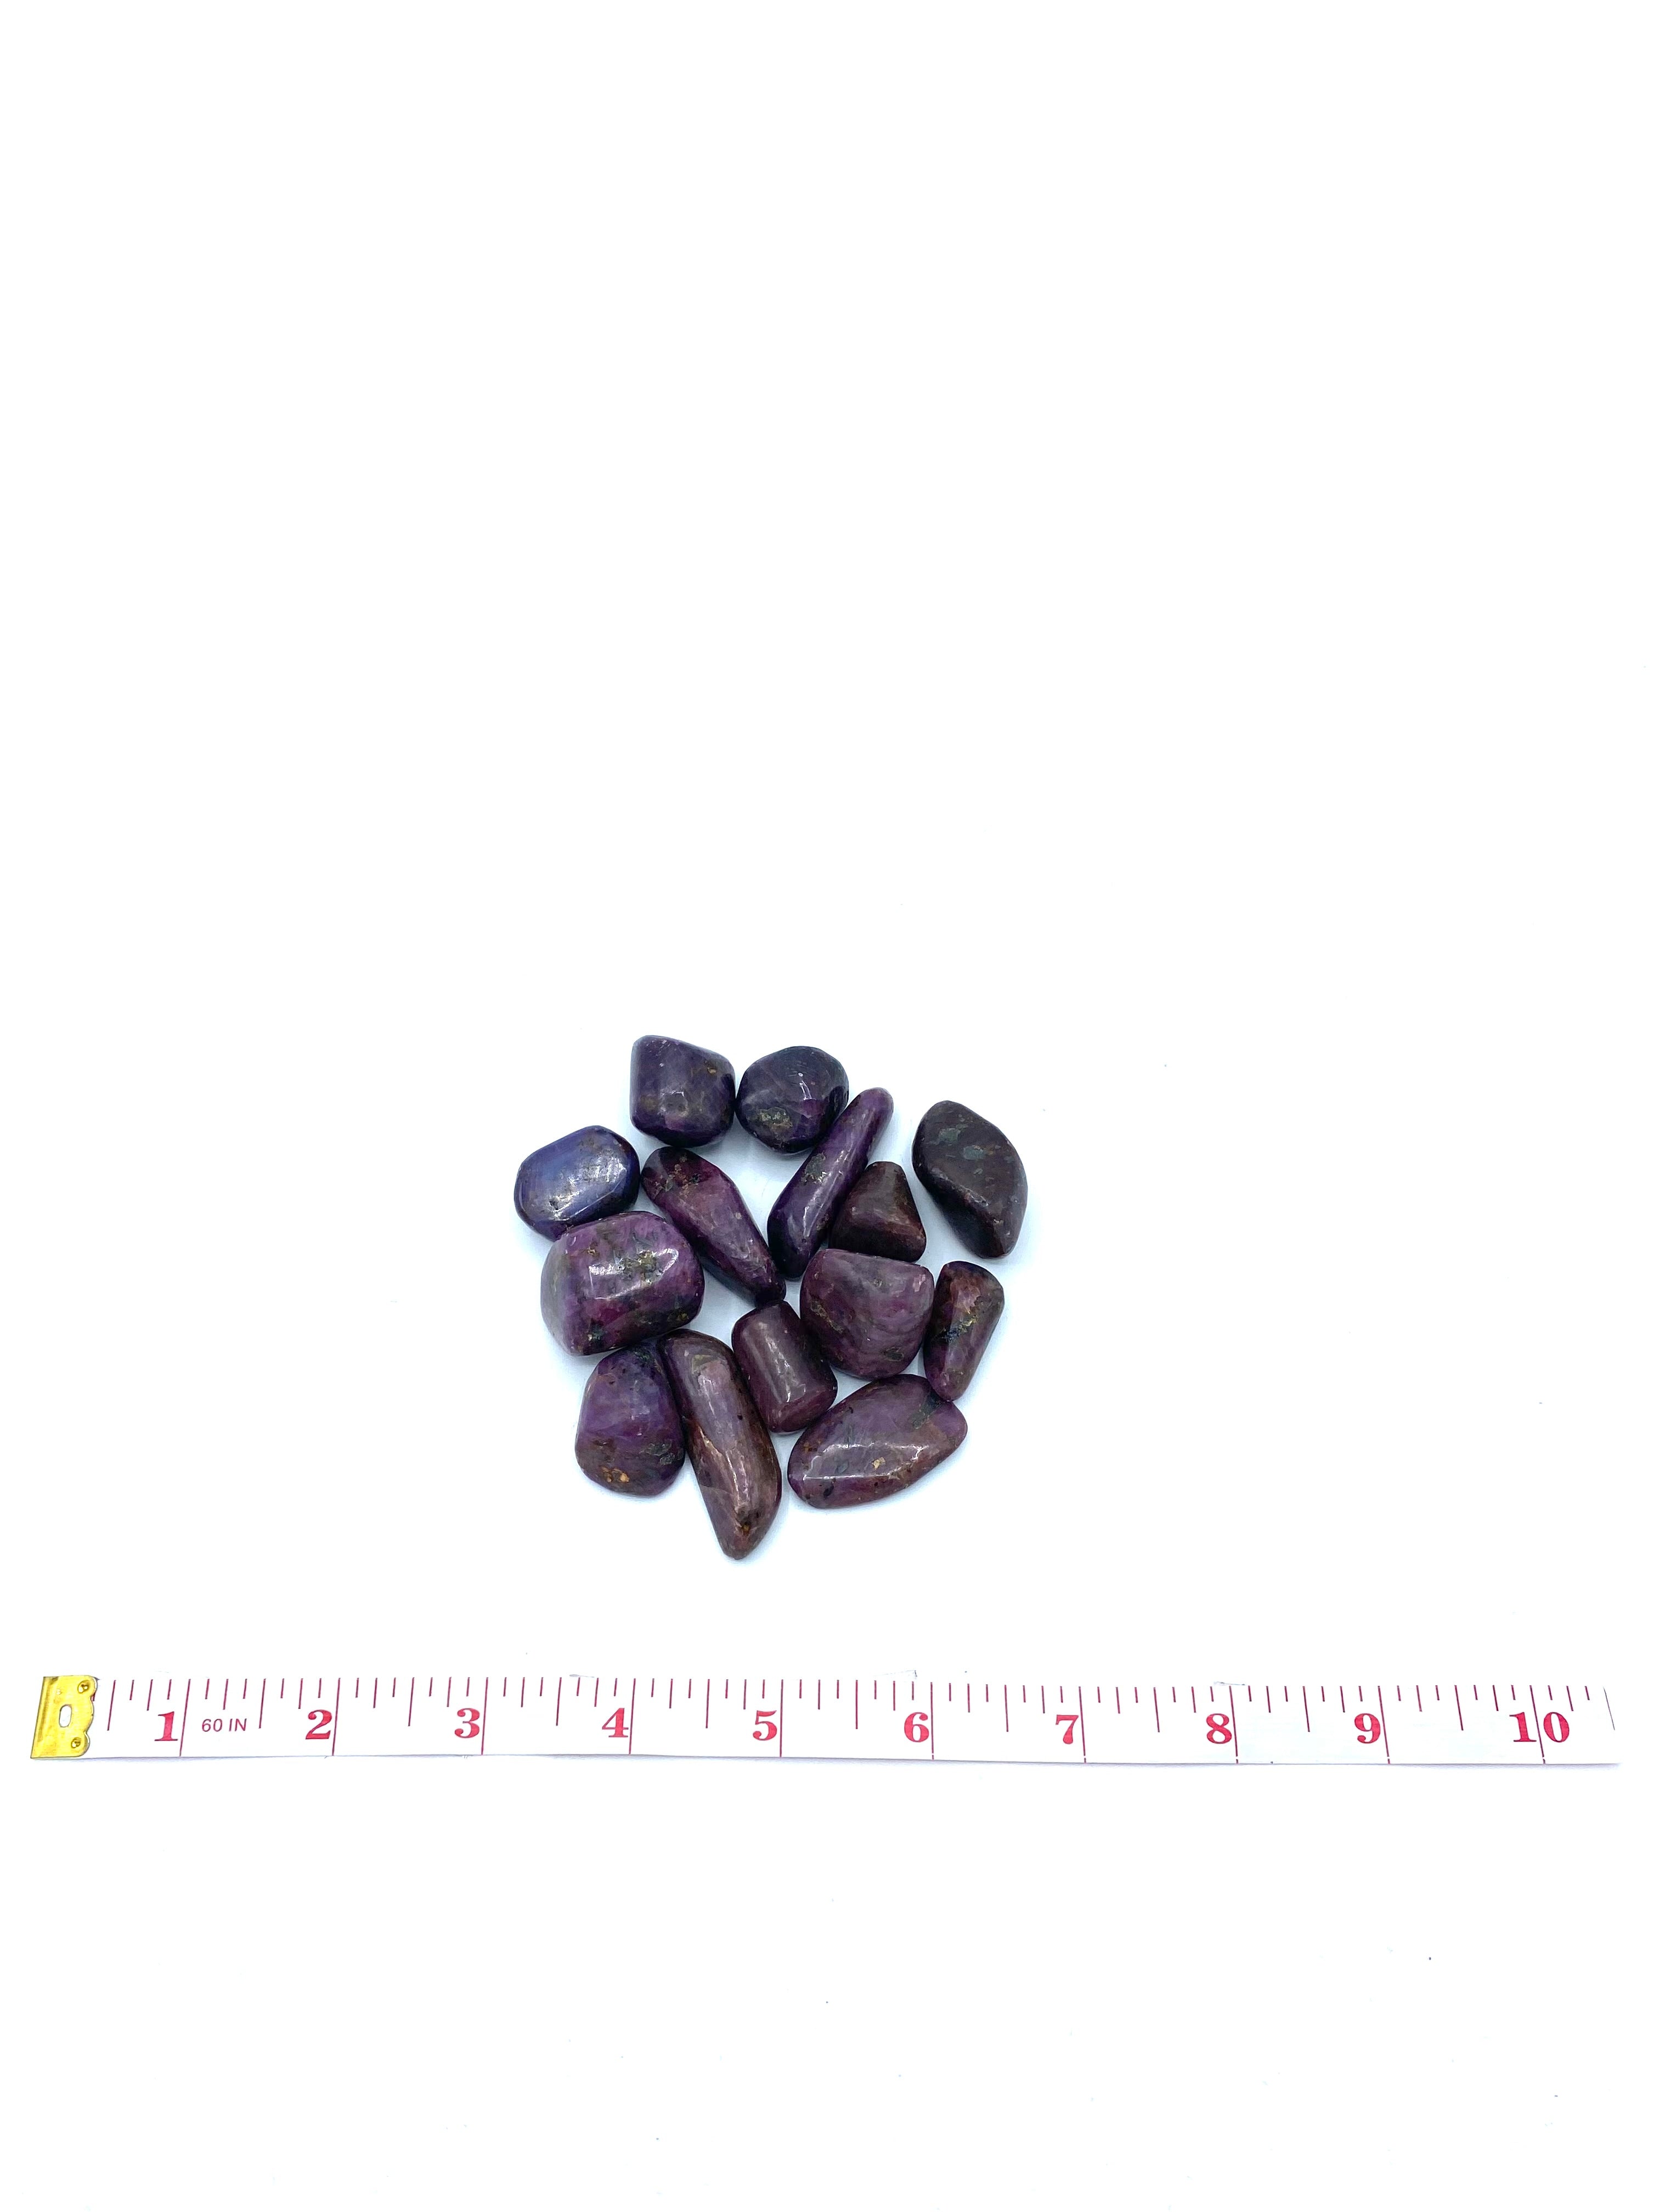 Ruby Tumbled Stones | Wholesale